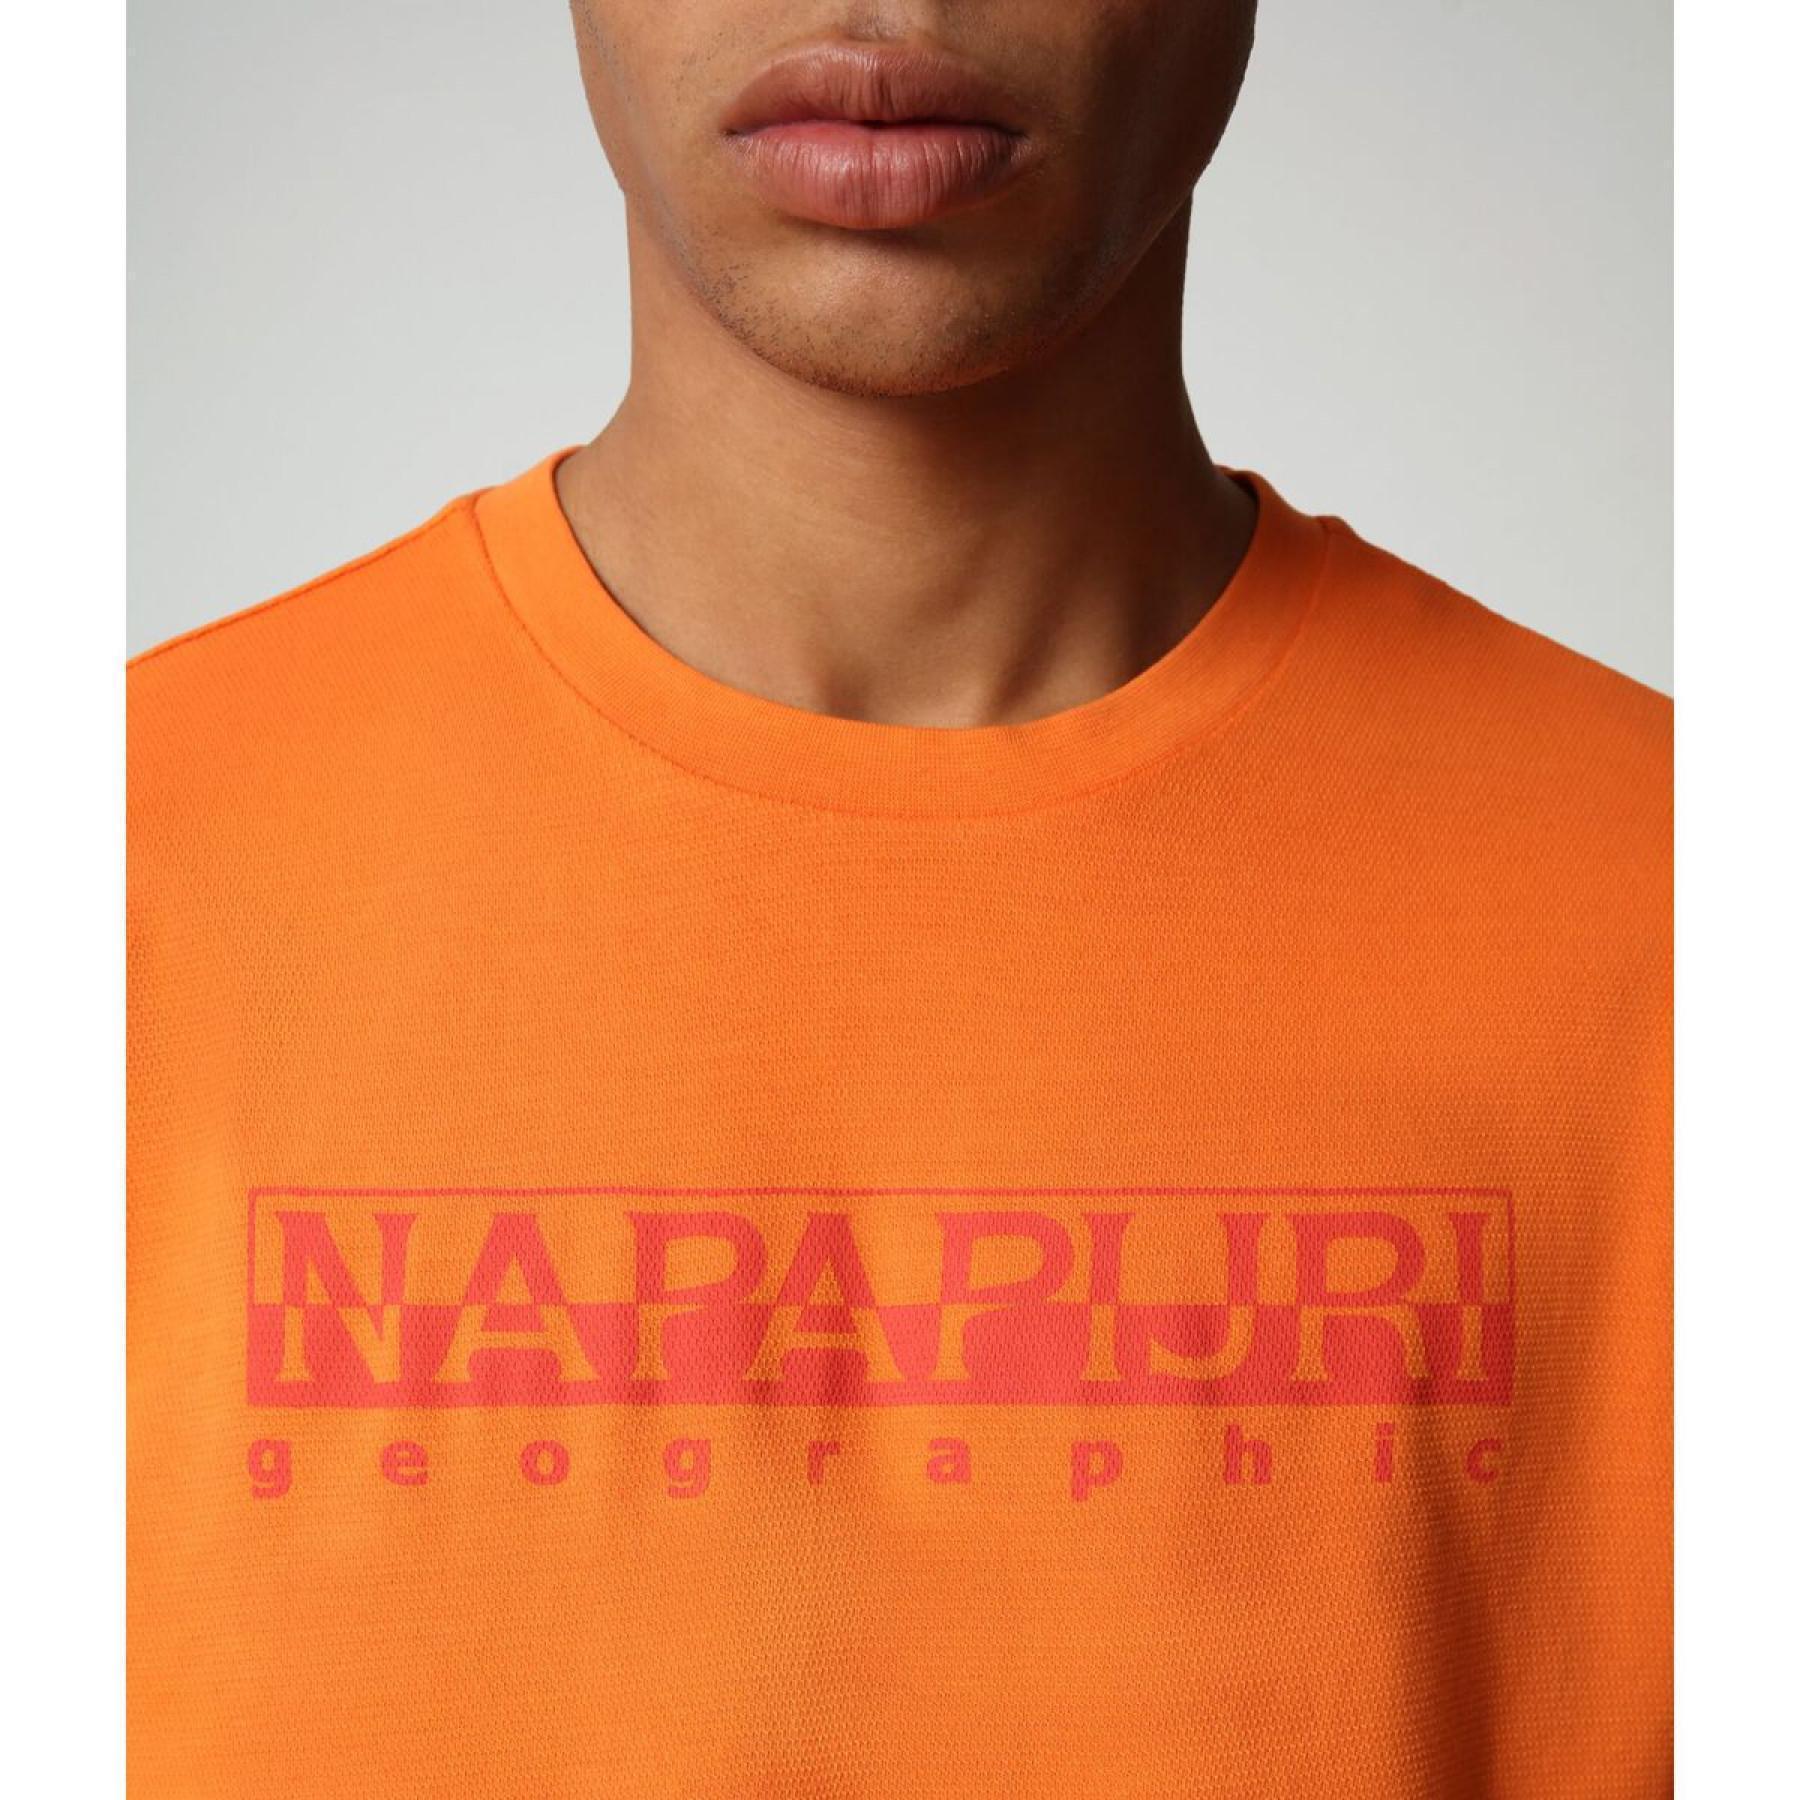 Camiseta Napapijri Serial